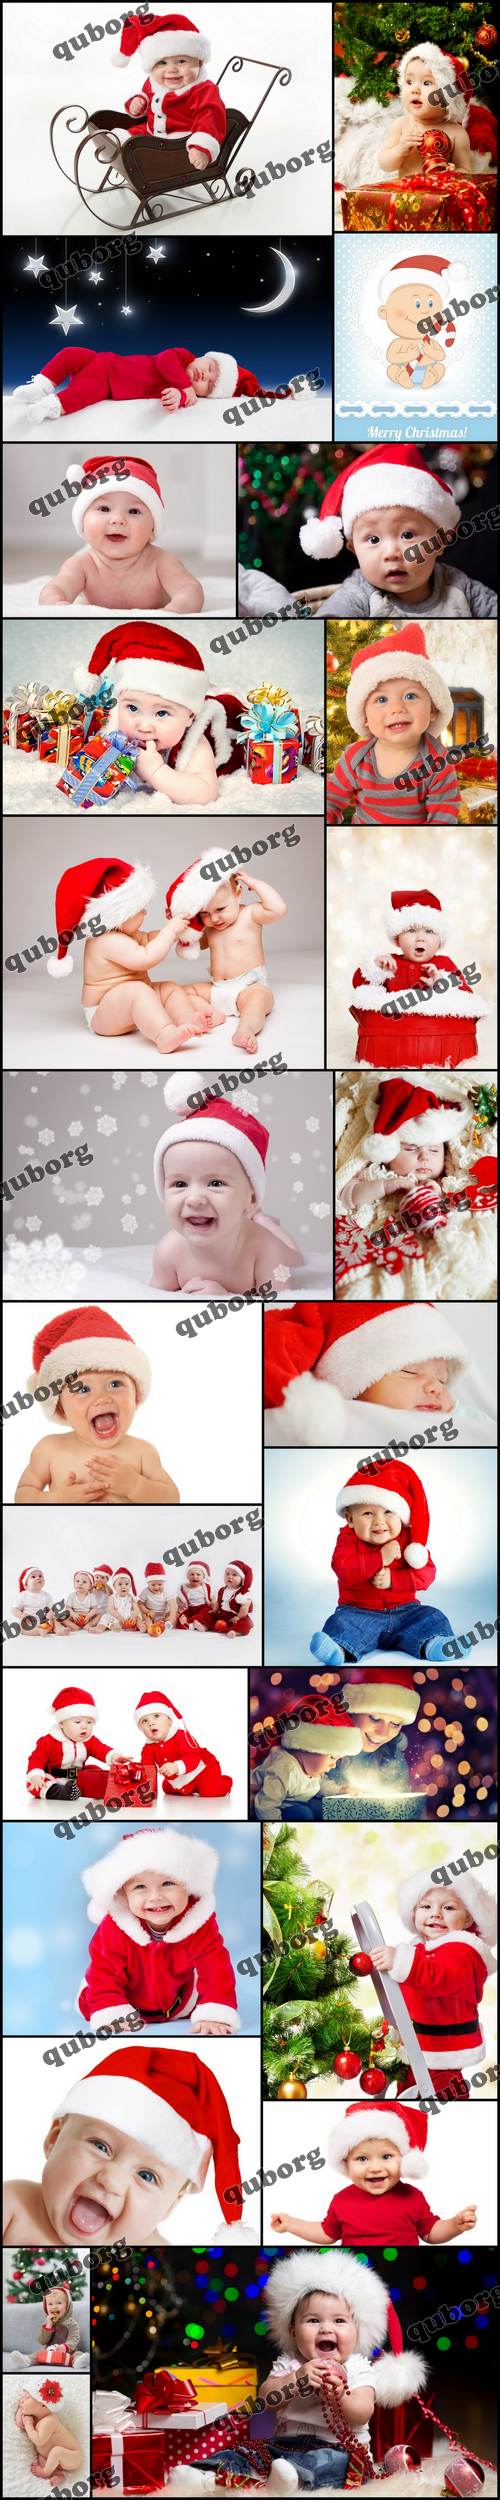 Stock Photos - Christmas Baby